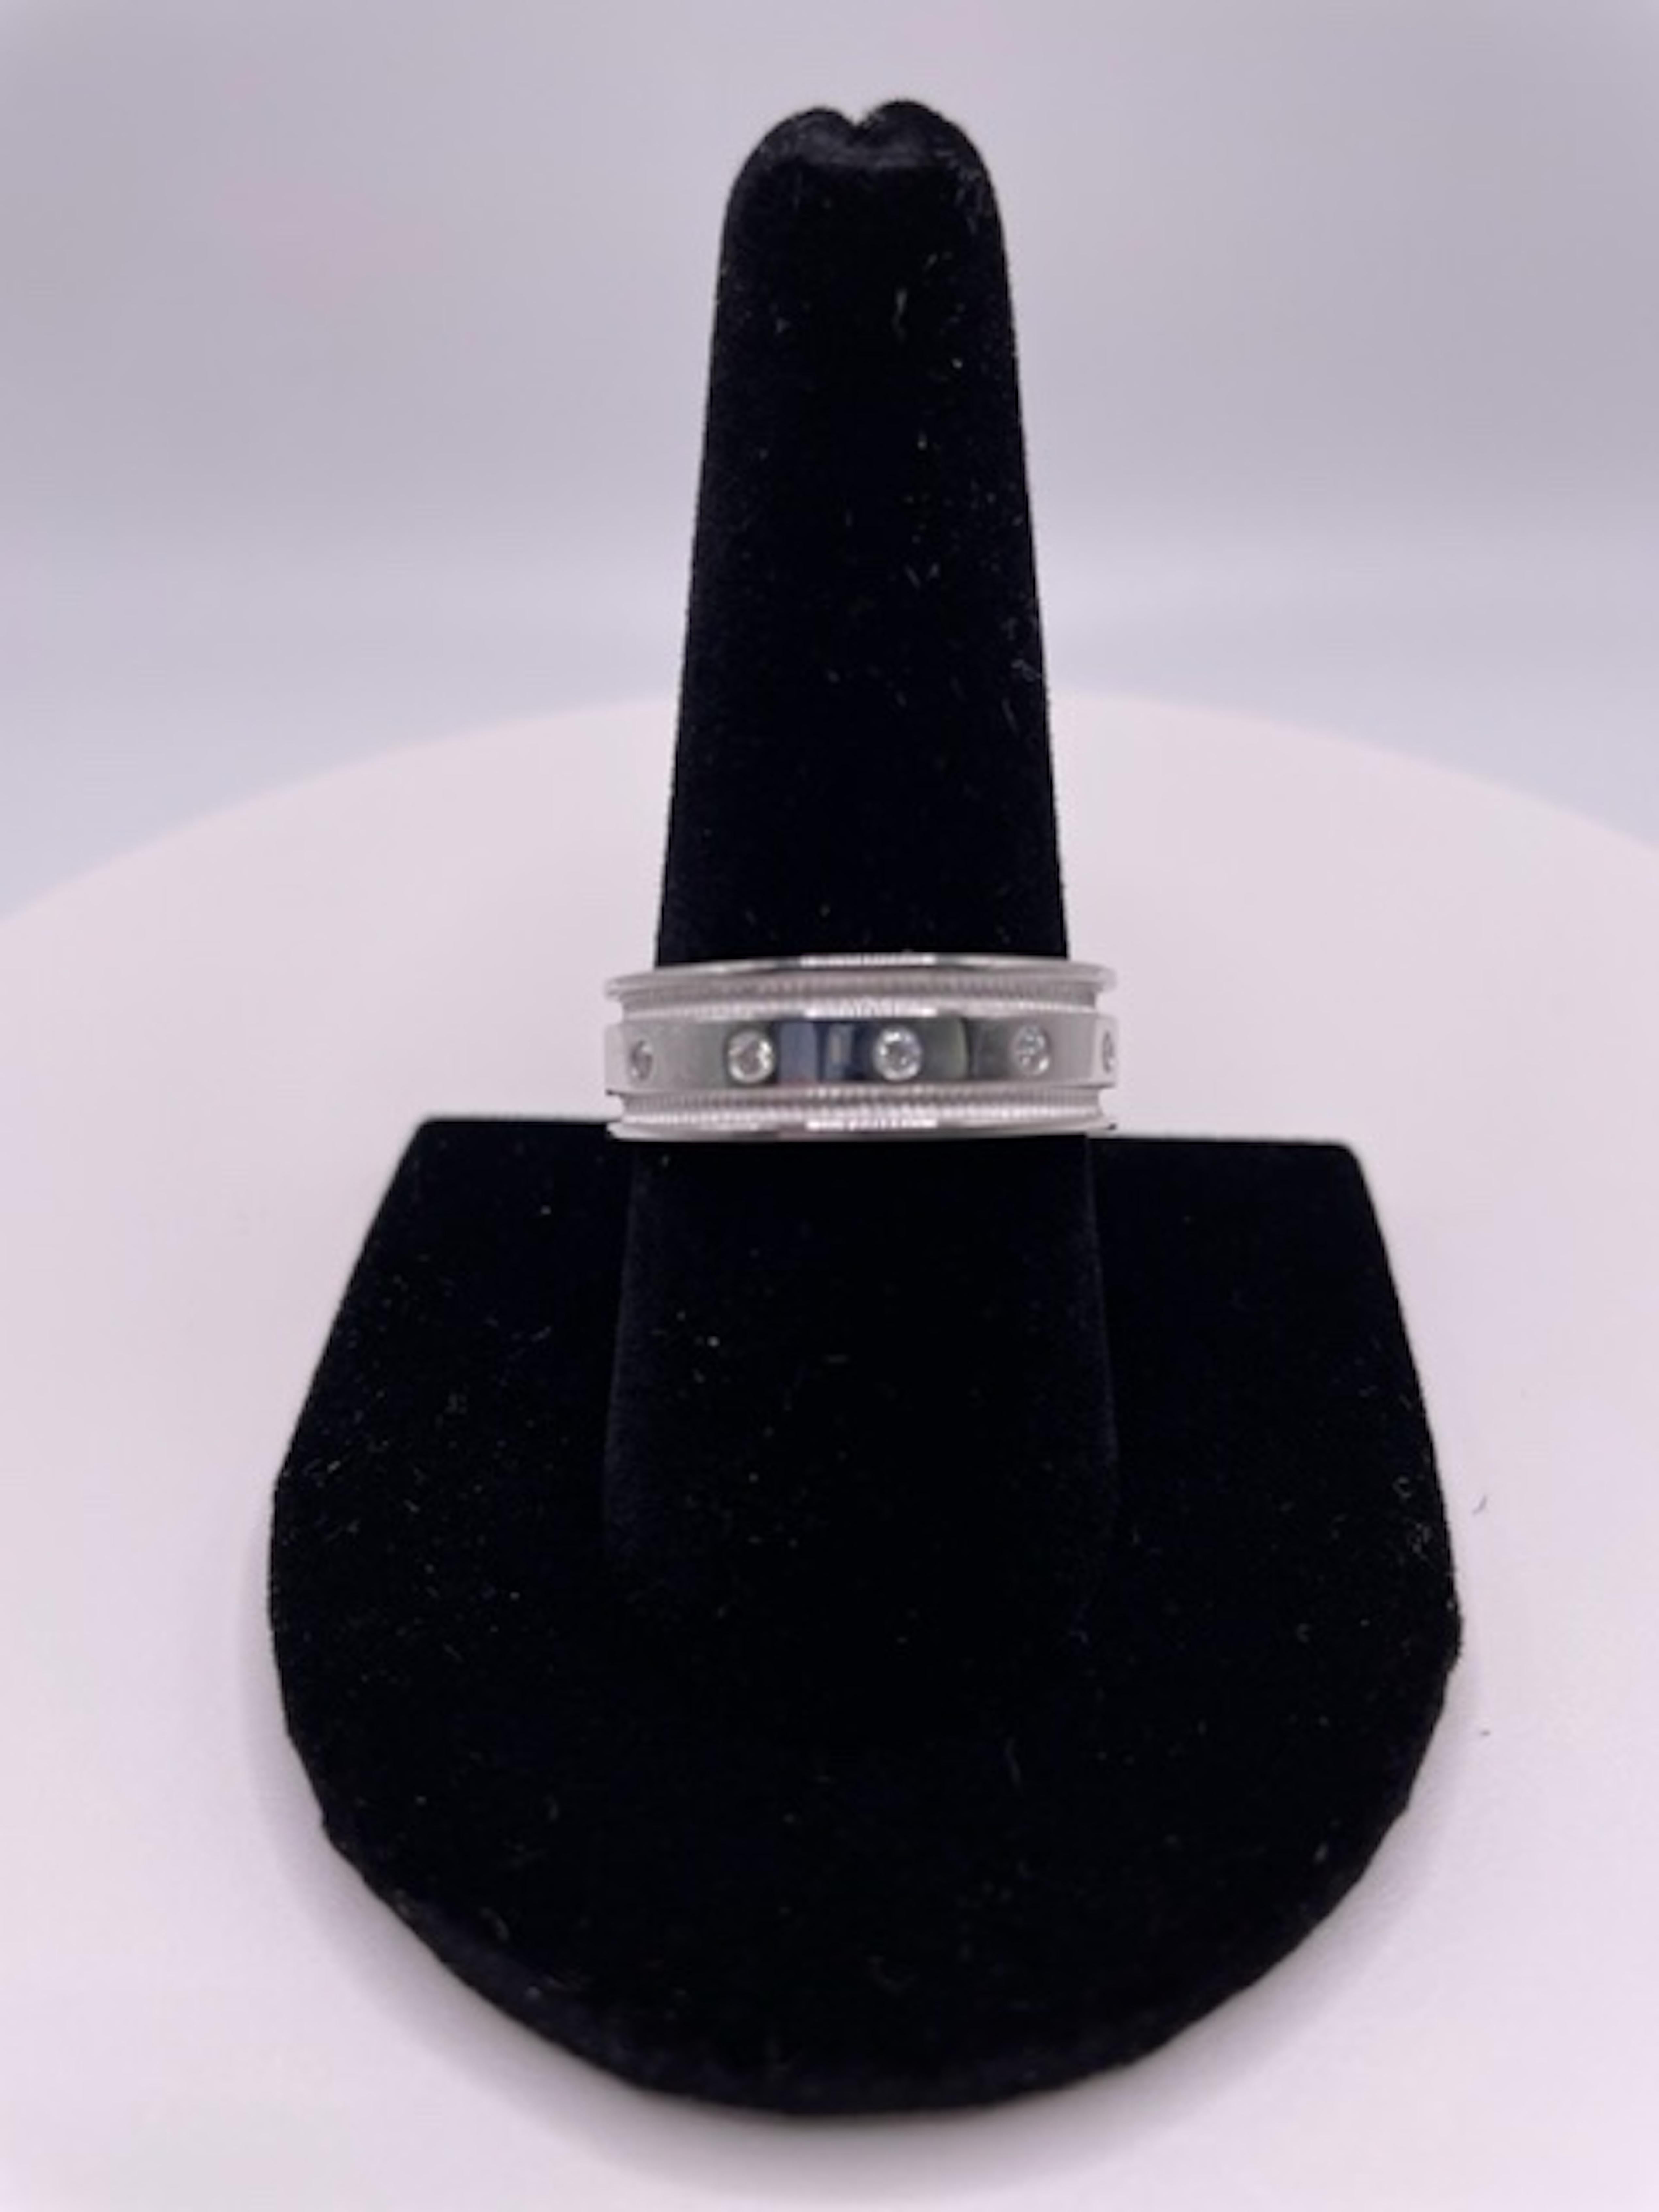 14k White Gold Men's Diamond Ring
Men's Diamond Band
14k White Gold
Diamond Weight: 0.14ct
Color: HI
Clarity: SI-2-I1
US Size: 9